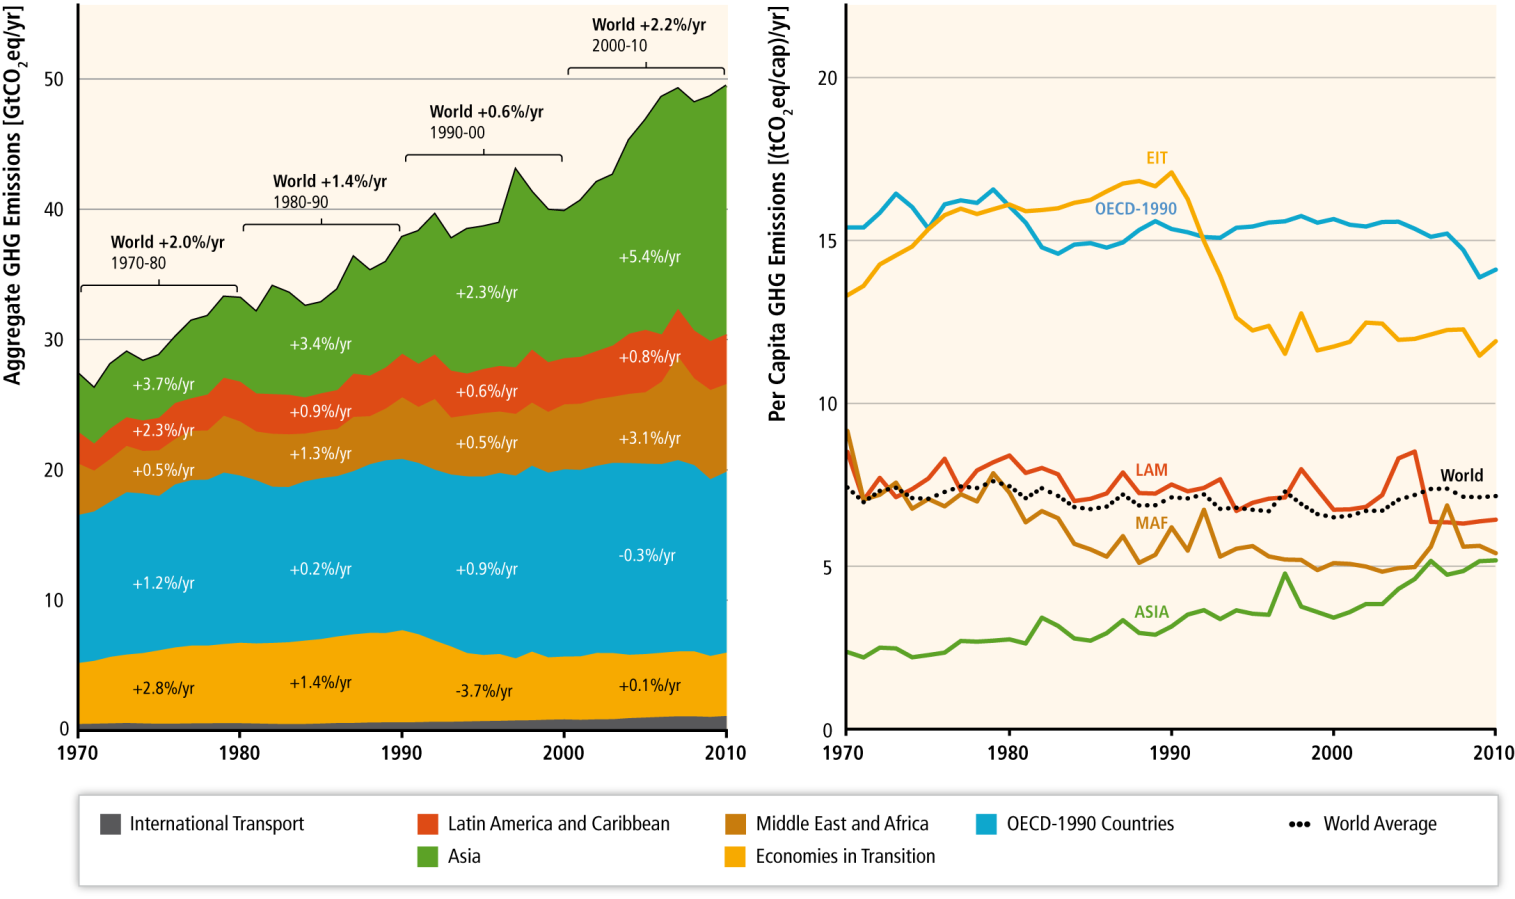 Territorial GHG emissions per region and per capita over 1970-2010 including